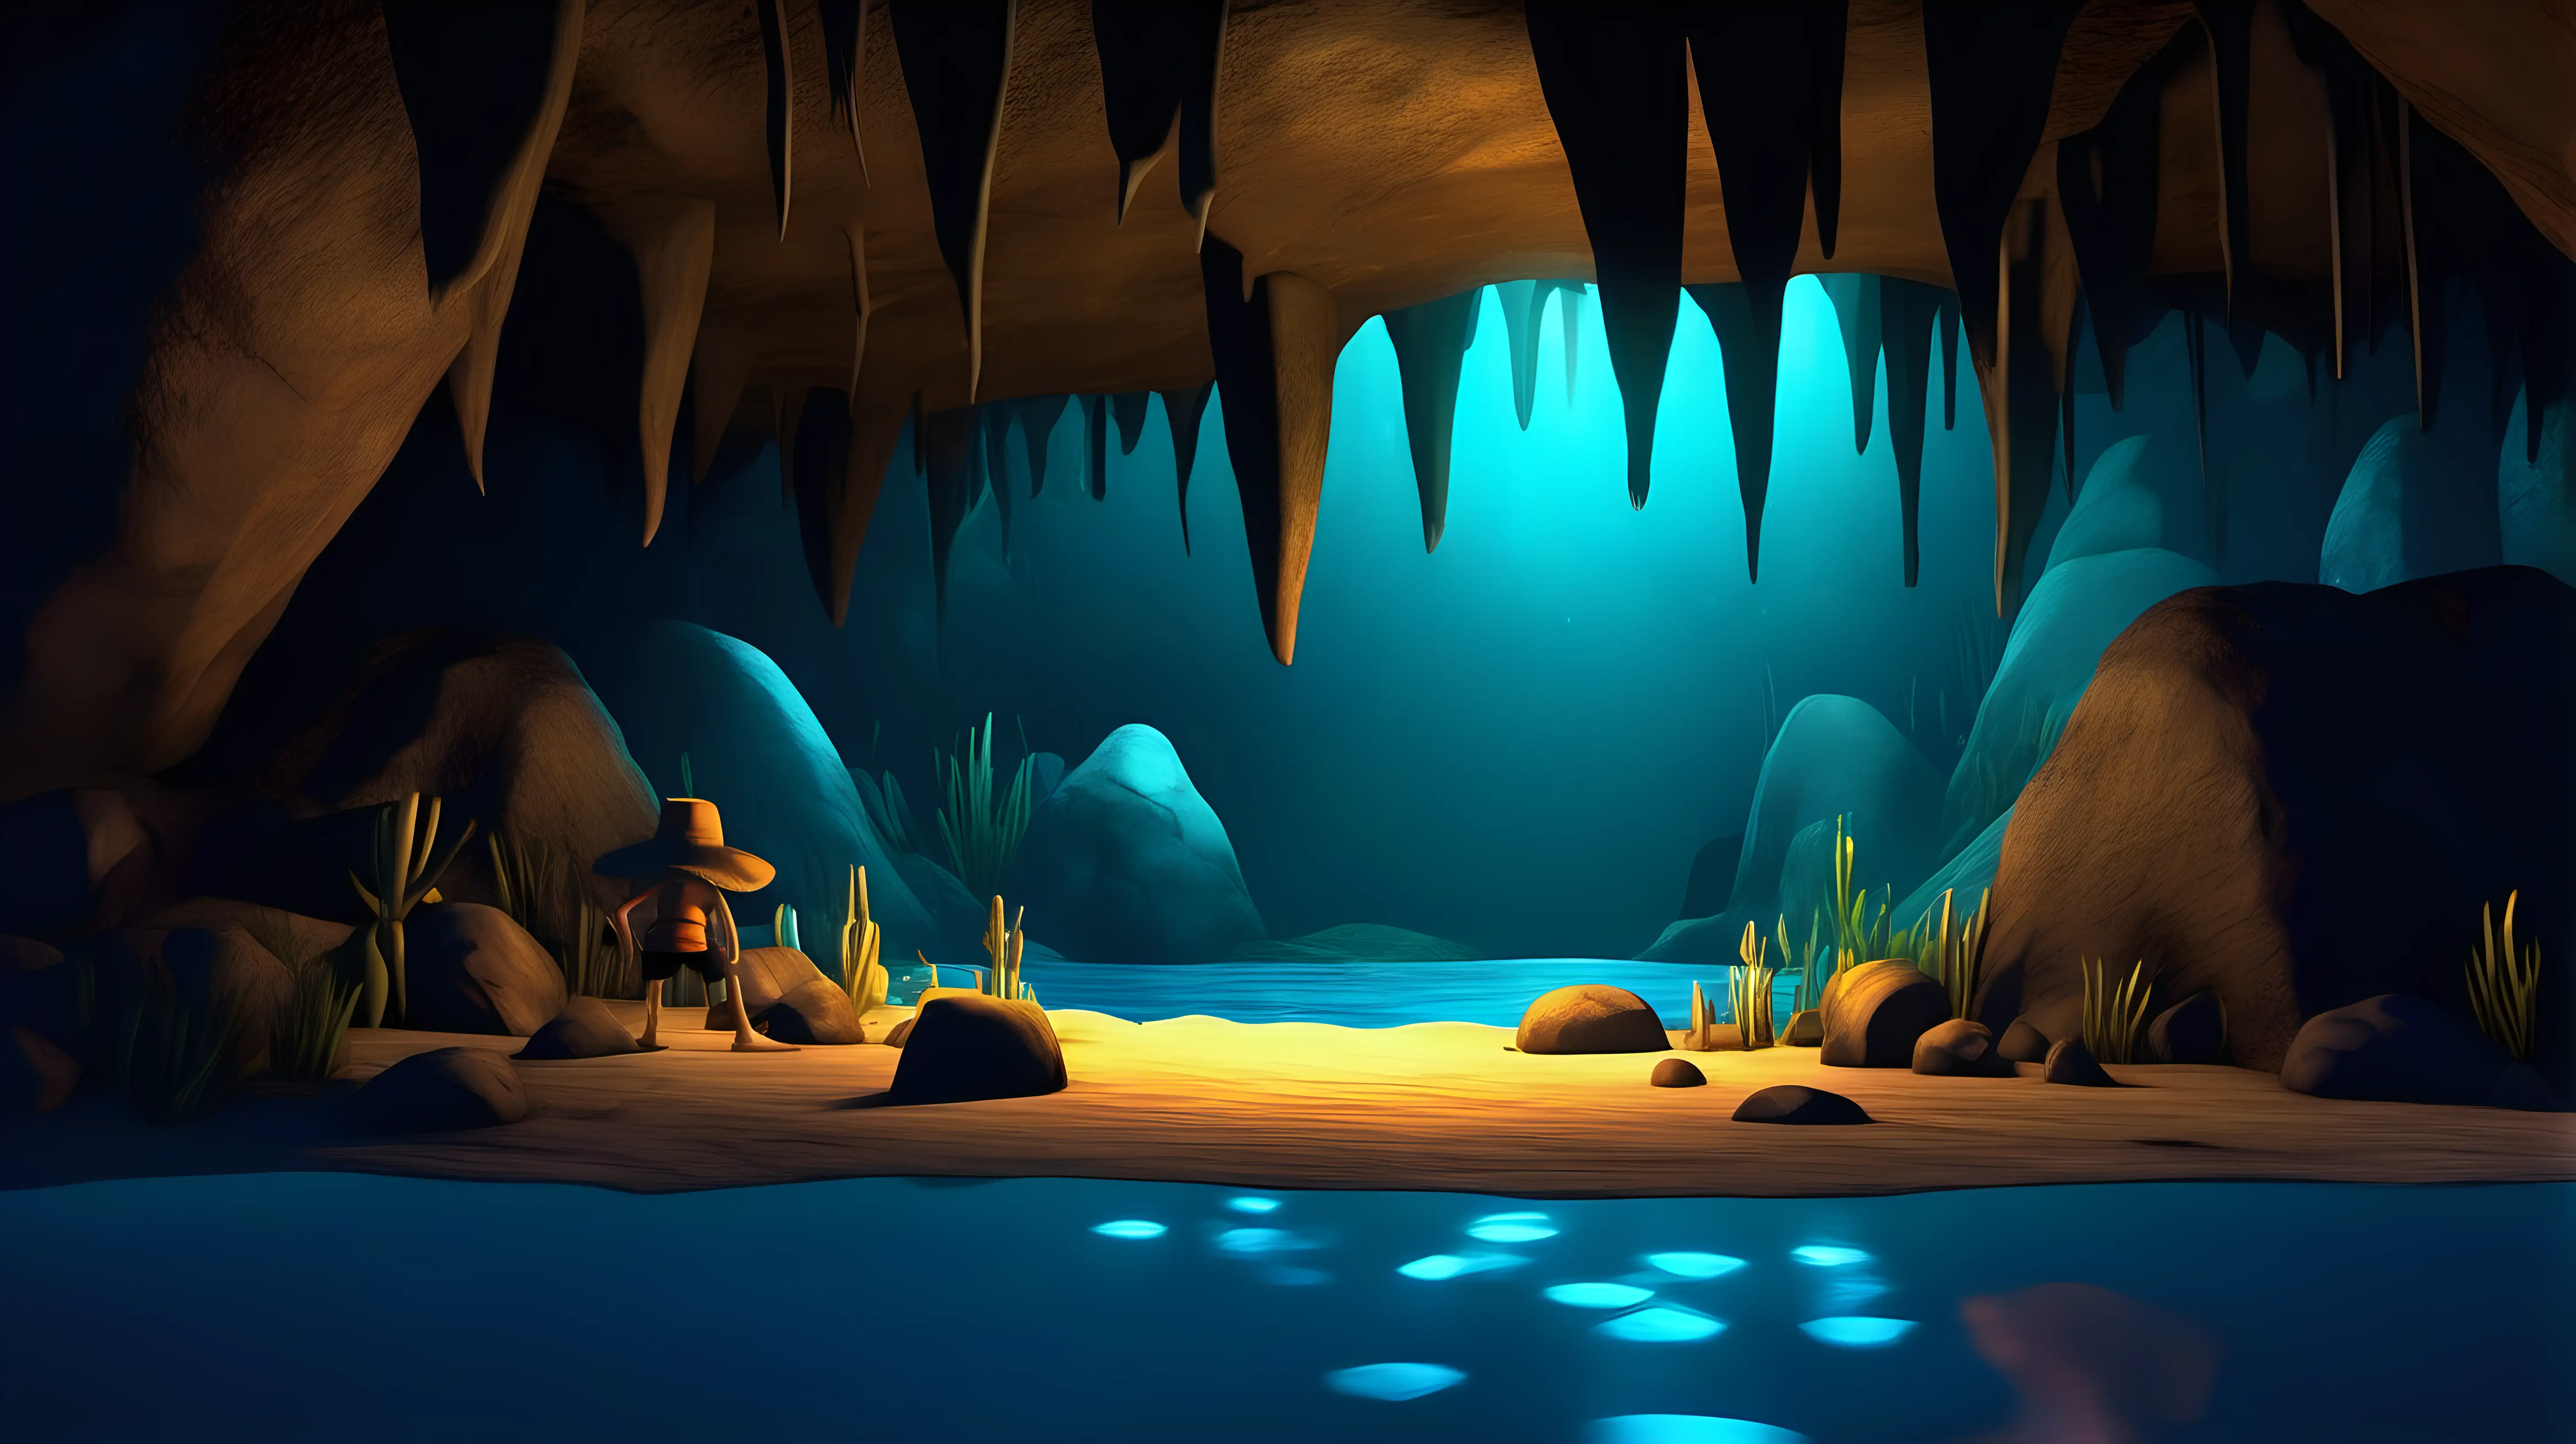 Enchanted Nighttime Cave with Luminous Water PixarInspired Maya Animation